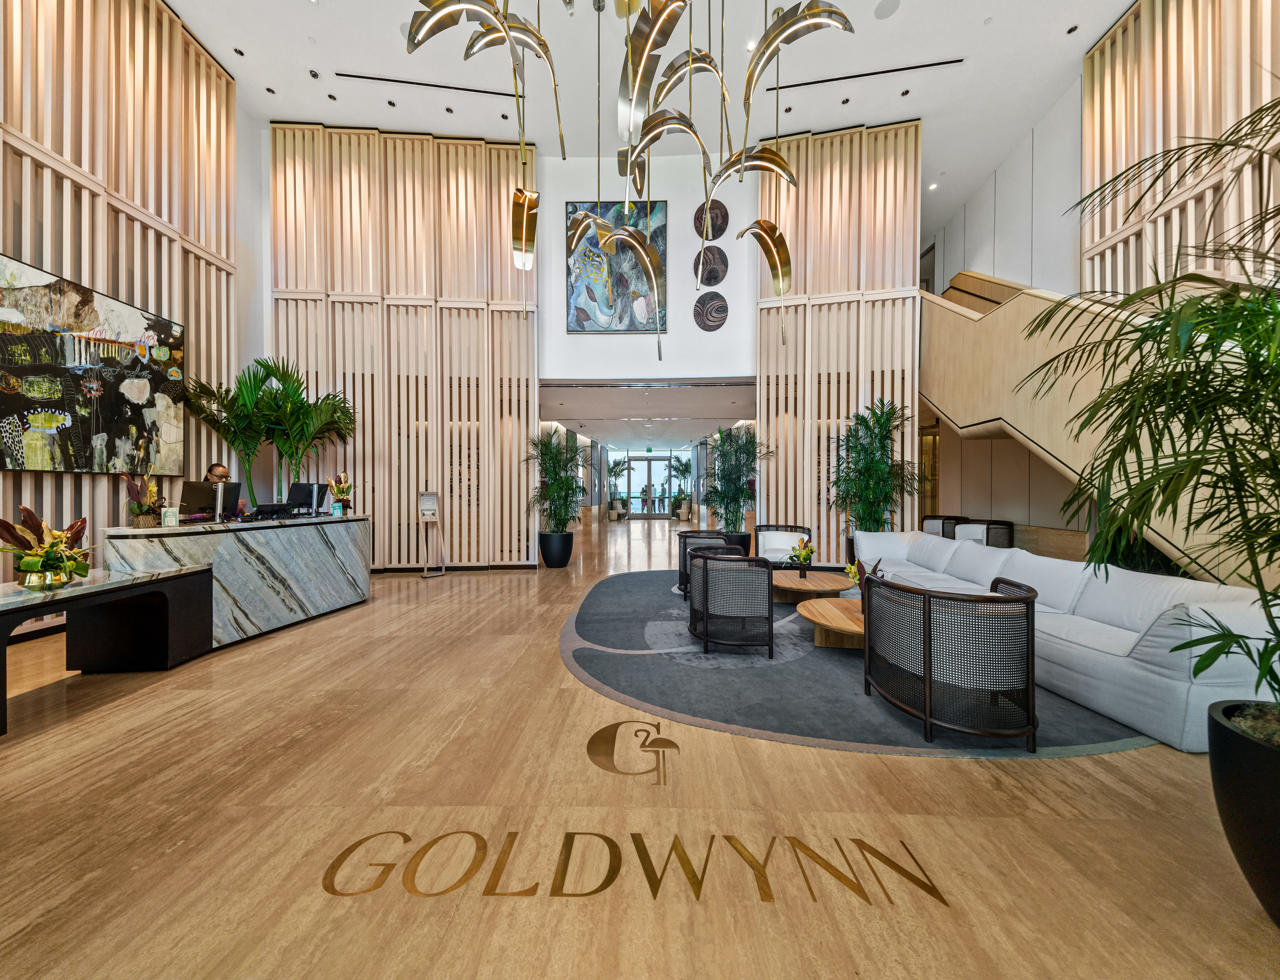 Goldwynn Residences